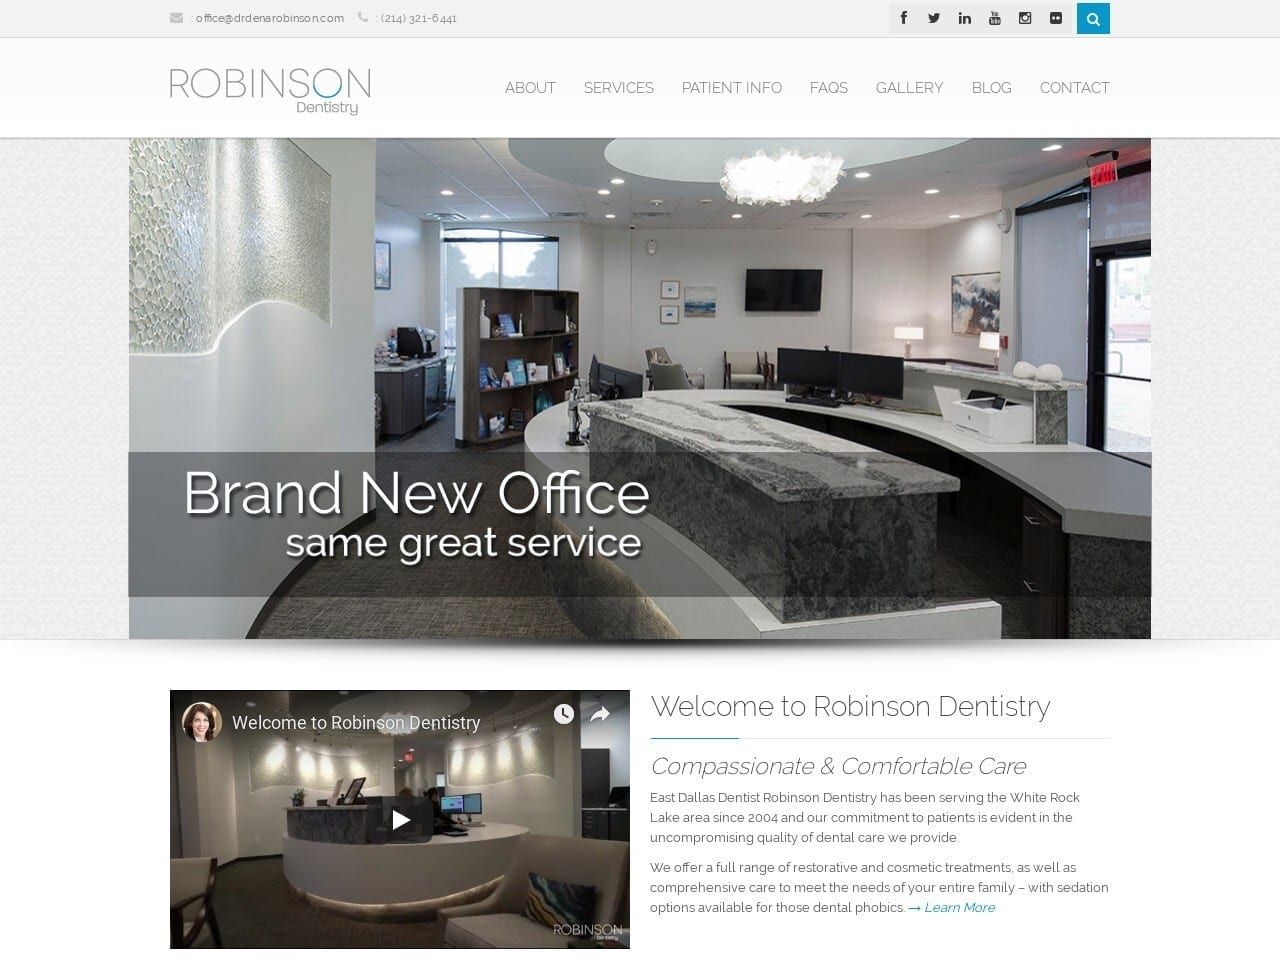 Dena Robinson Dentist Website Screenshot from drdenarobinson.com